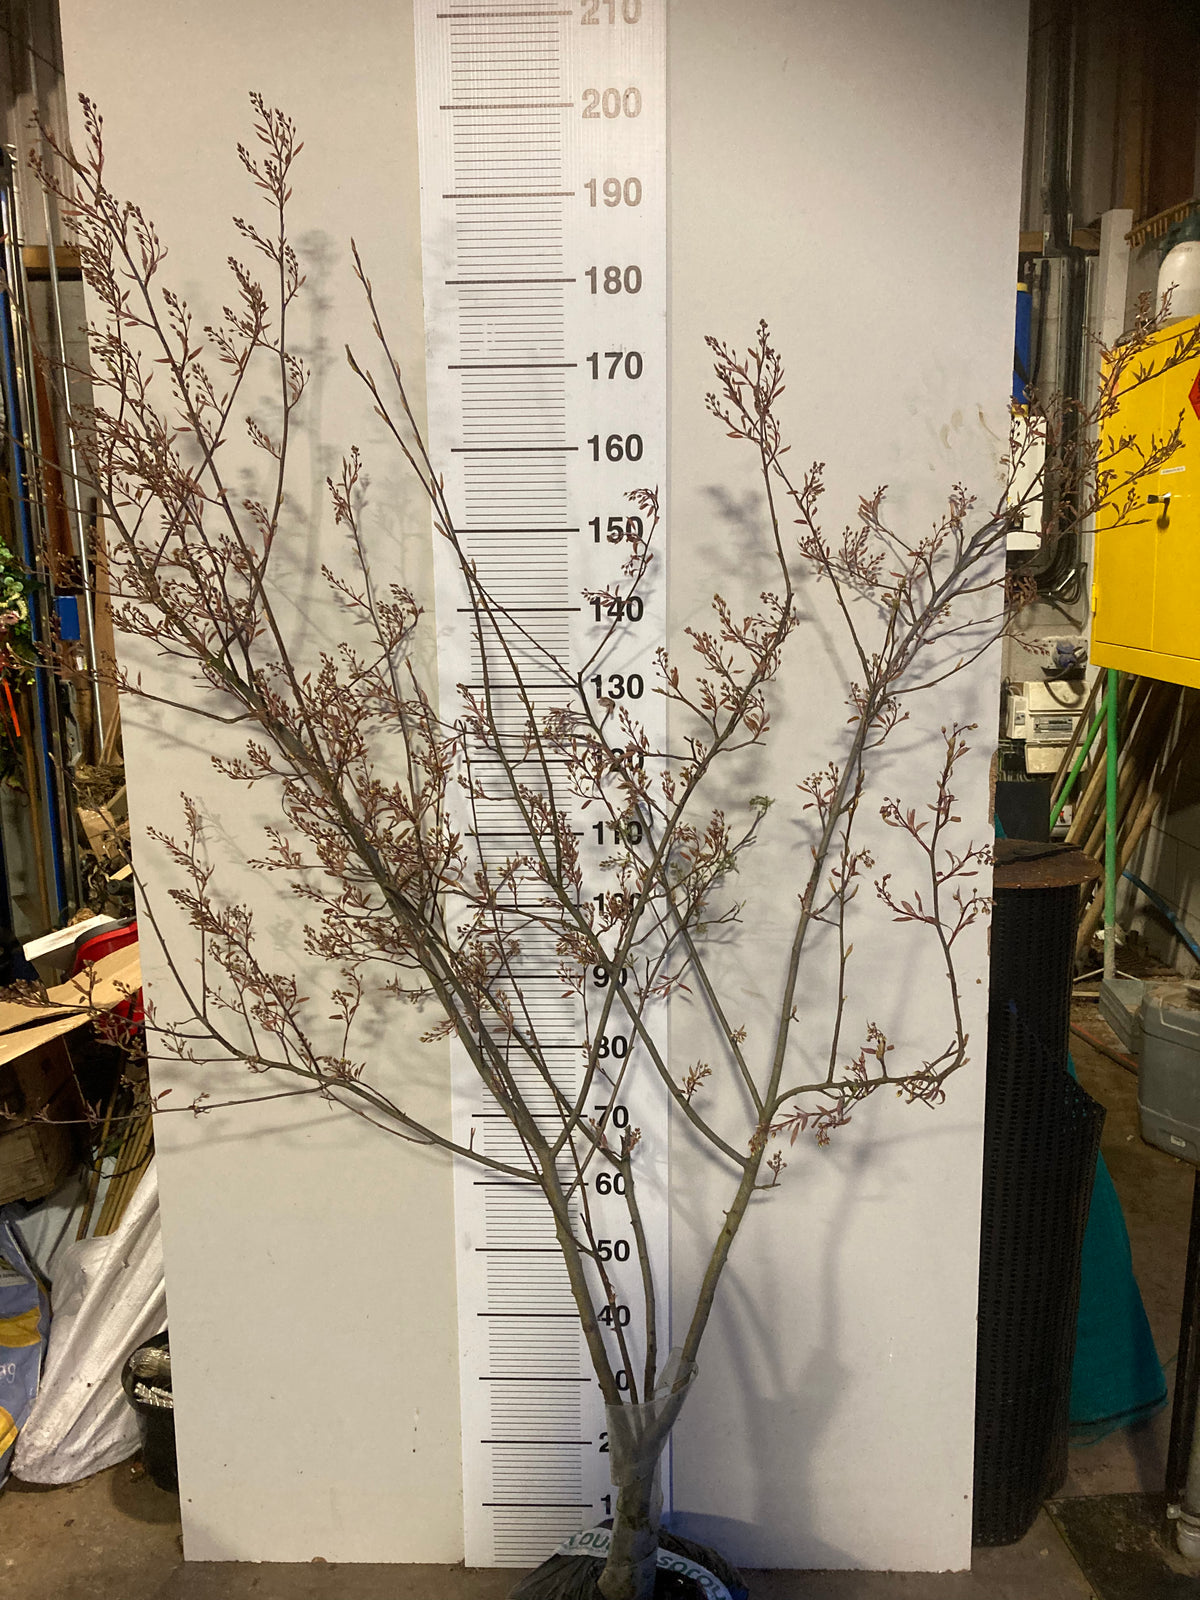 Amelanchier multi-stem tree 120 cm potted or 200 cm rootballs.